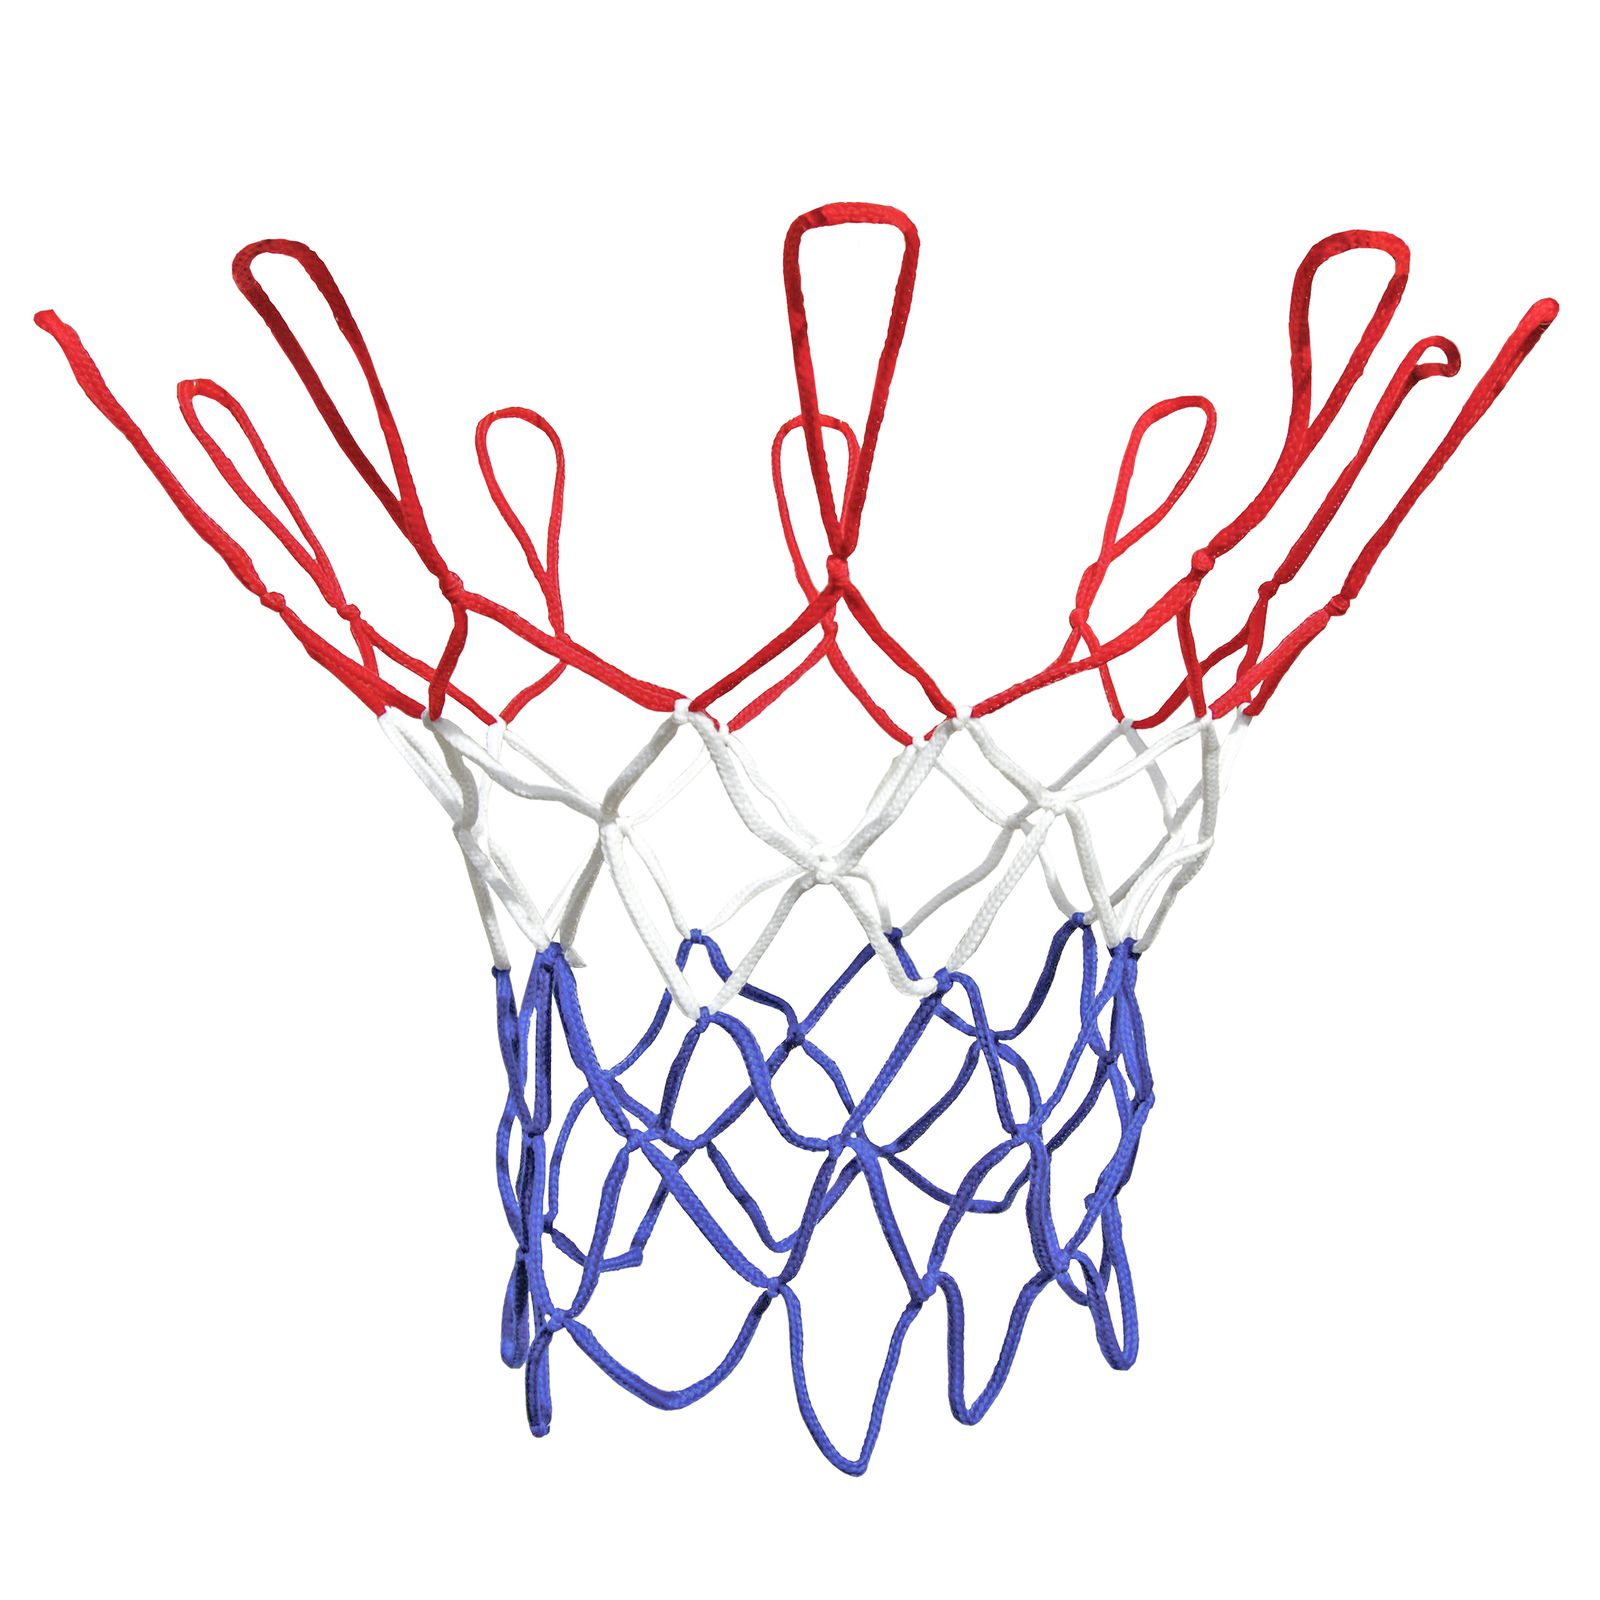 6 Millimeter Ersatznetz Vinex Basketballnetz/Ballnetz